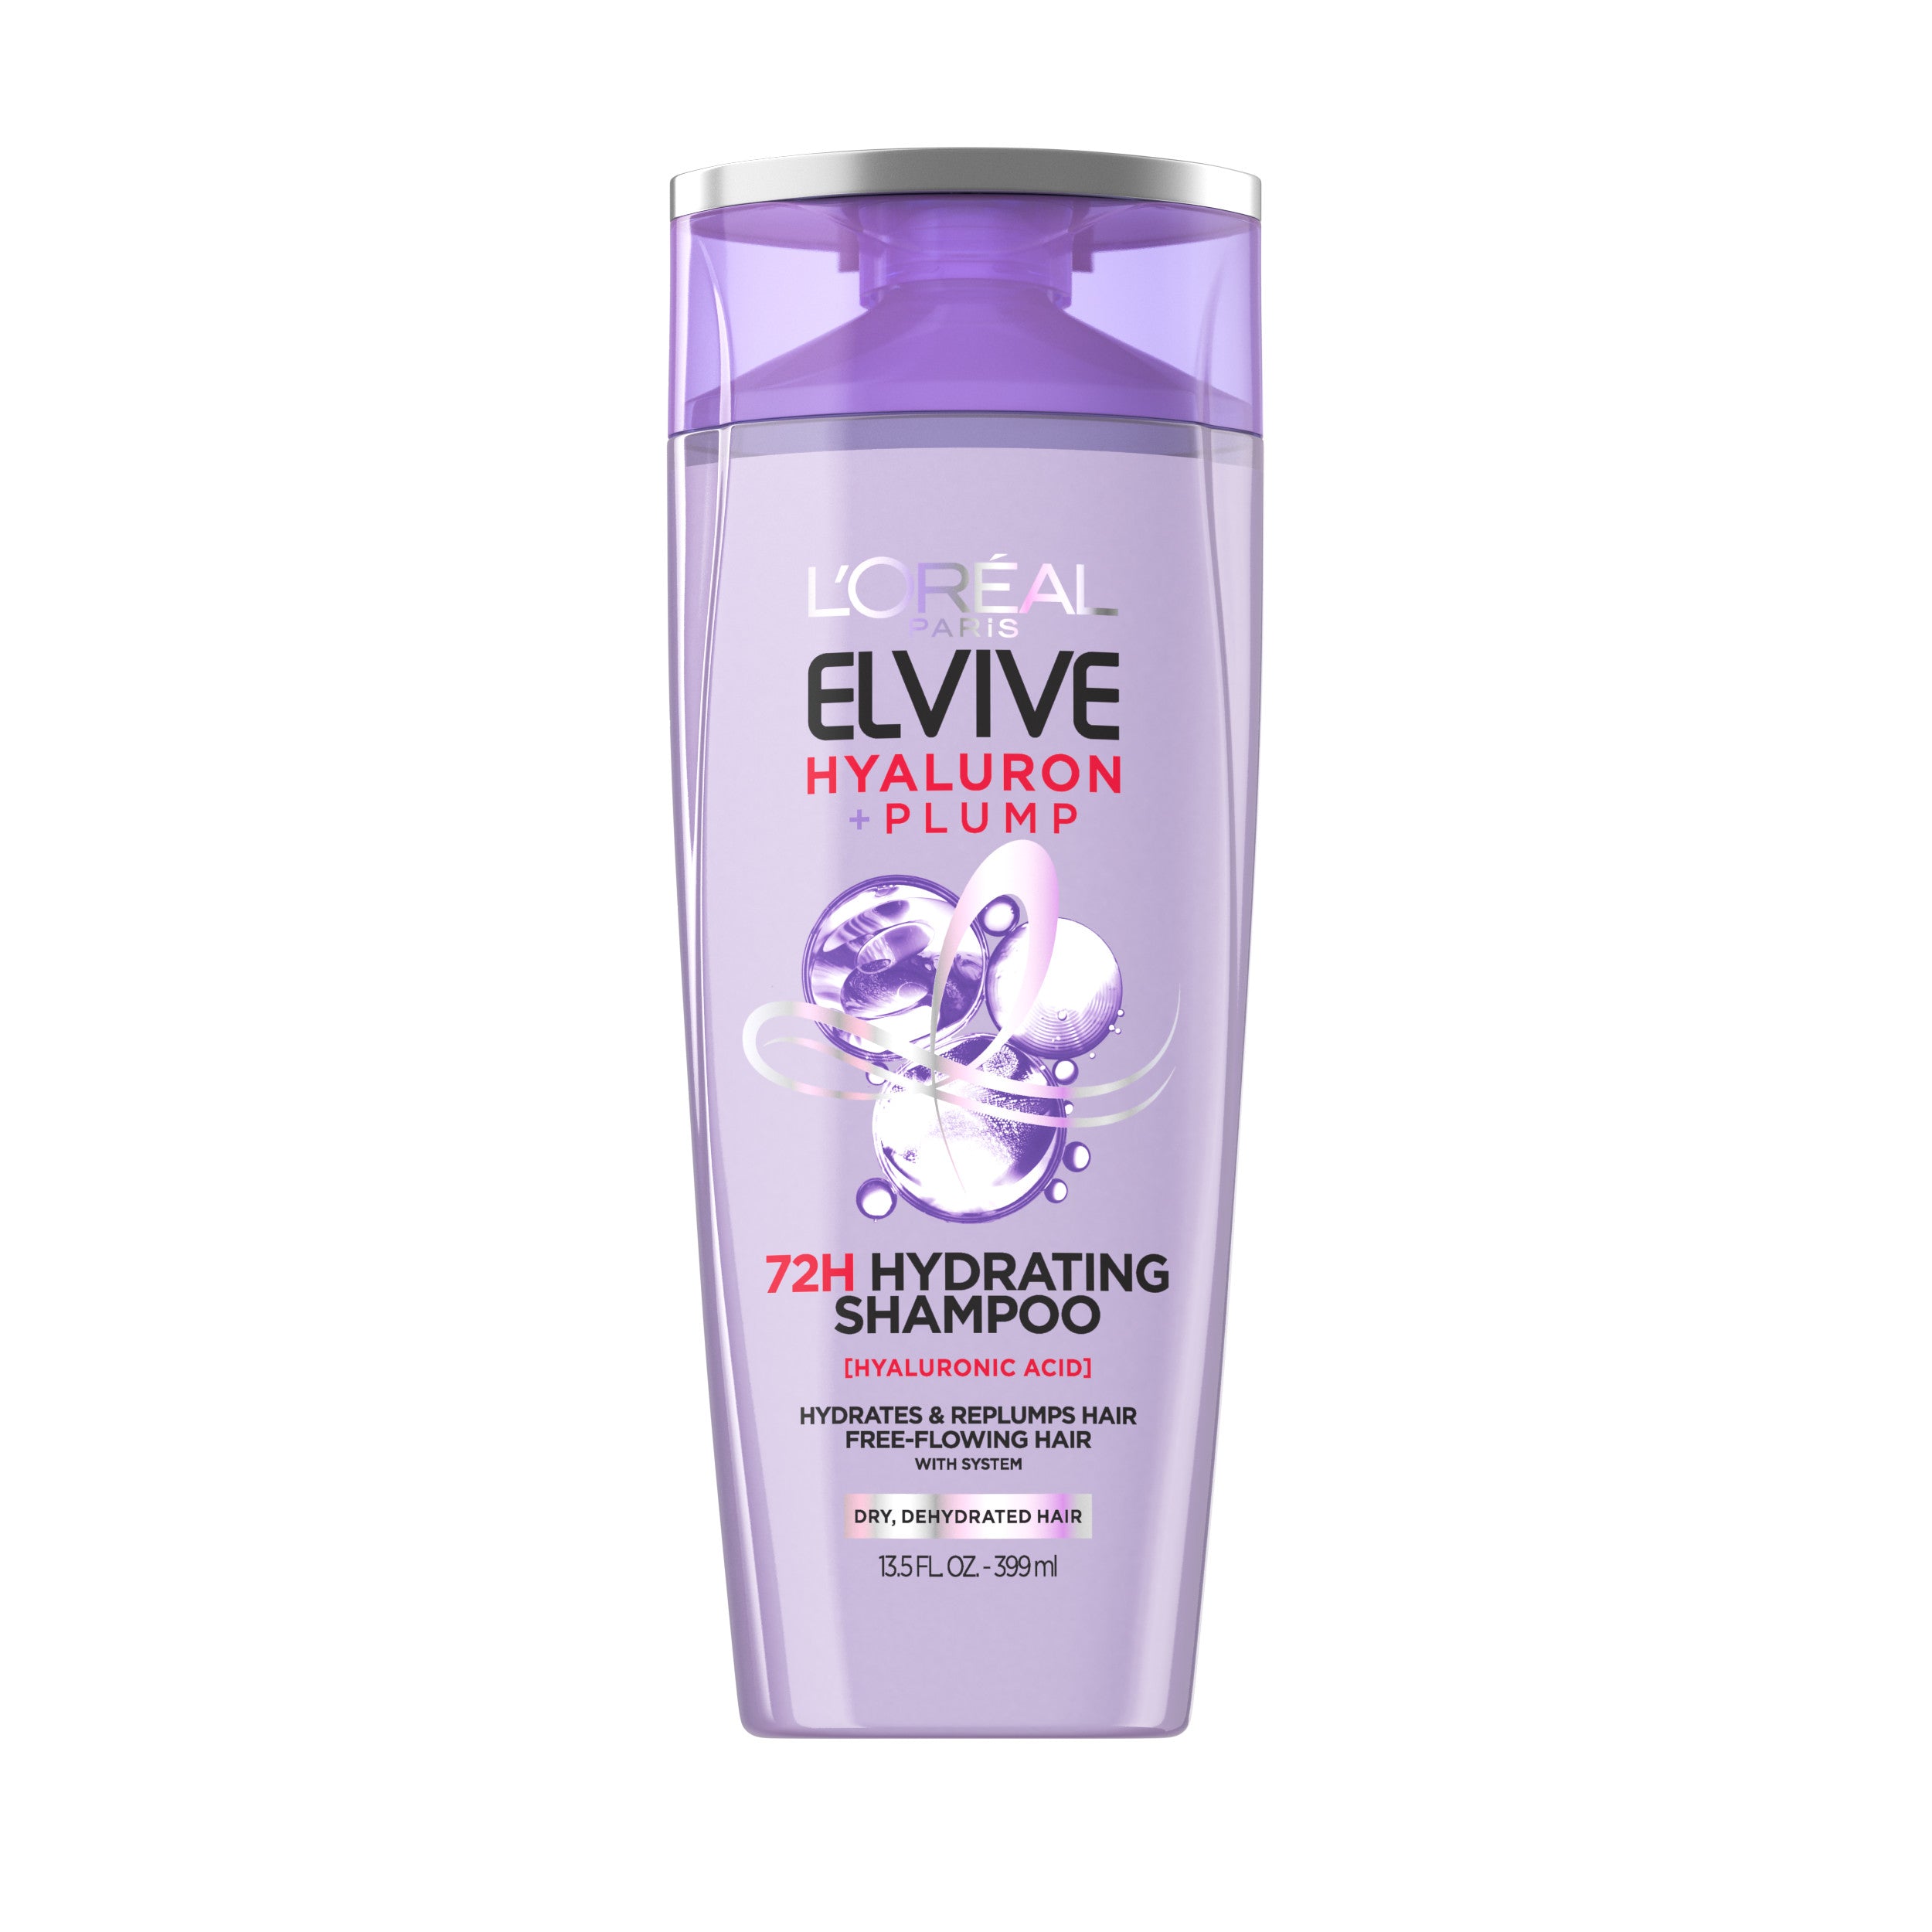 L'Oreal Paris Elvive Hyaluron Plump 72H Hydrating Shampoo, 13.5 fl oz | MTTS387